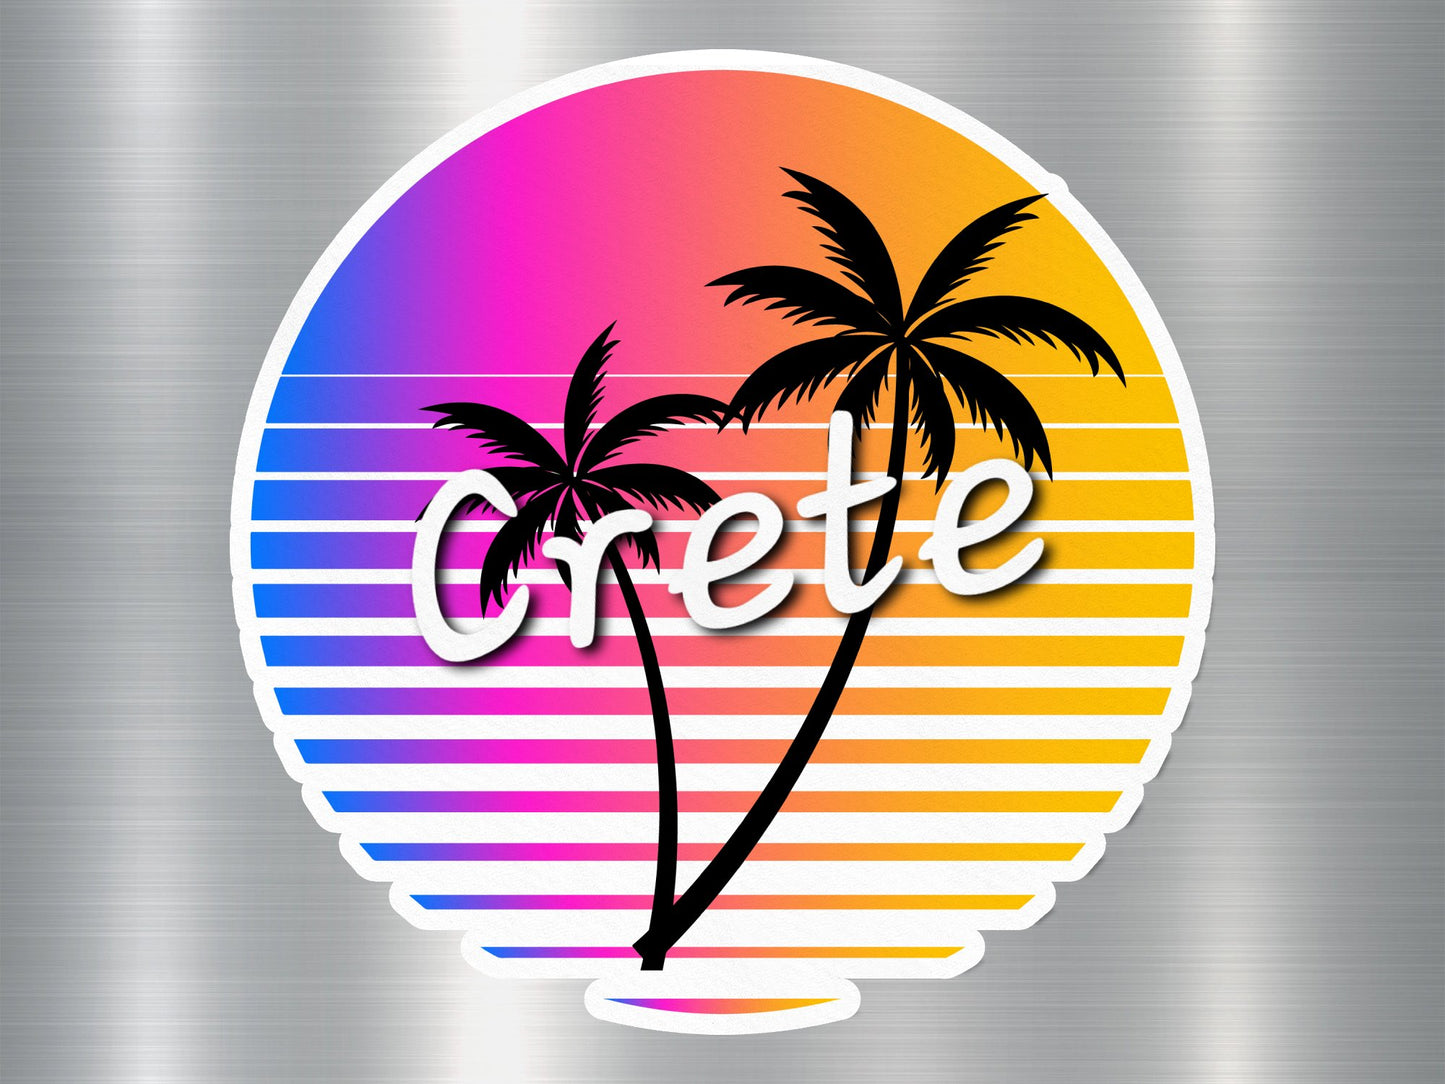 Crete Sticker